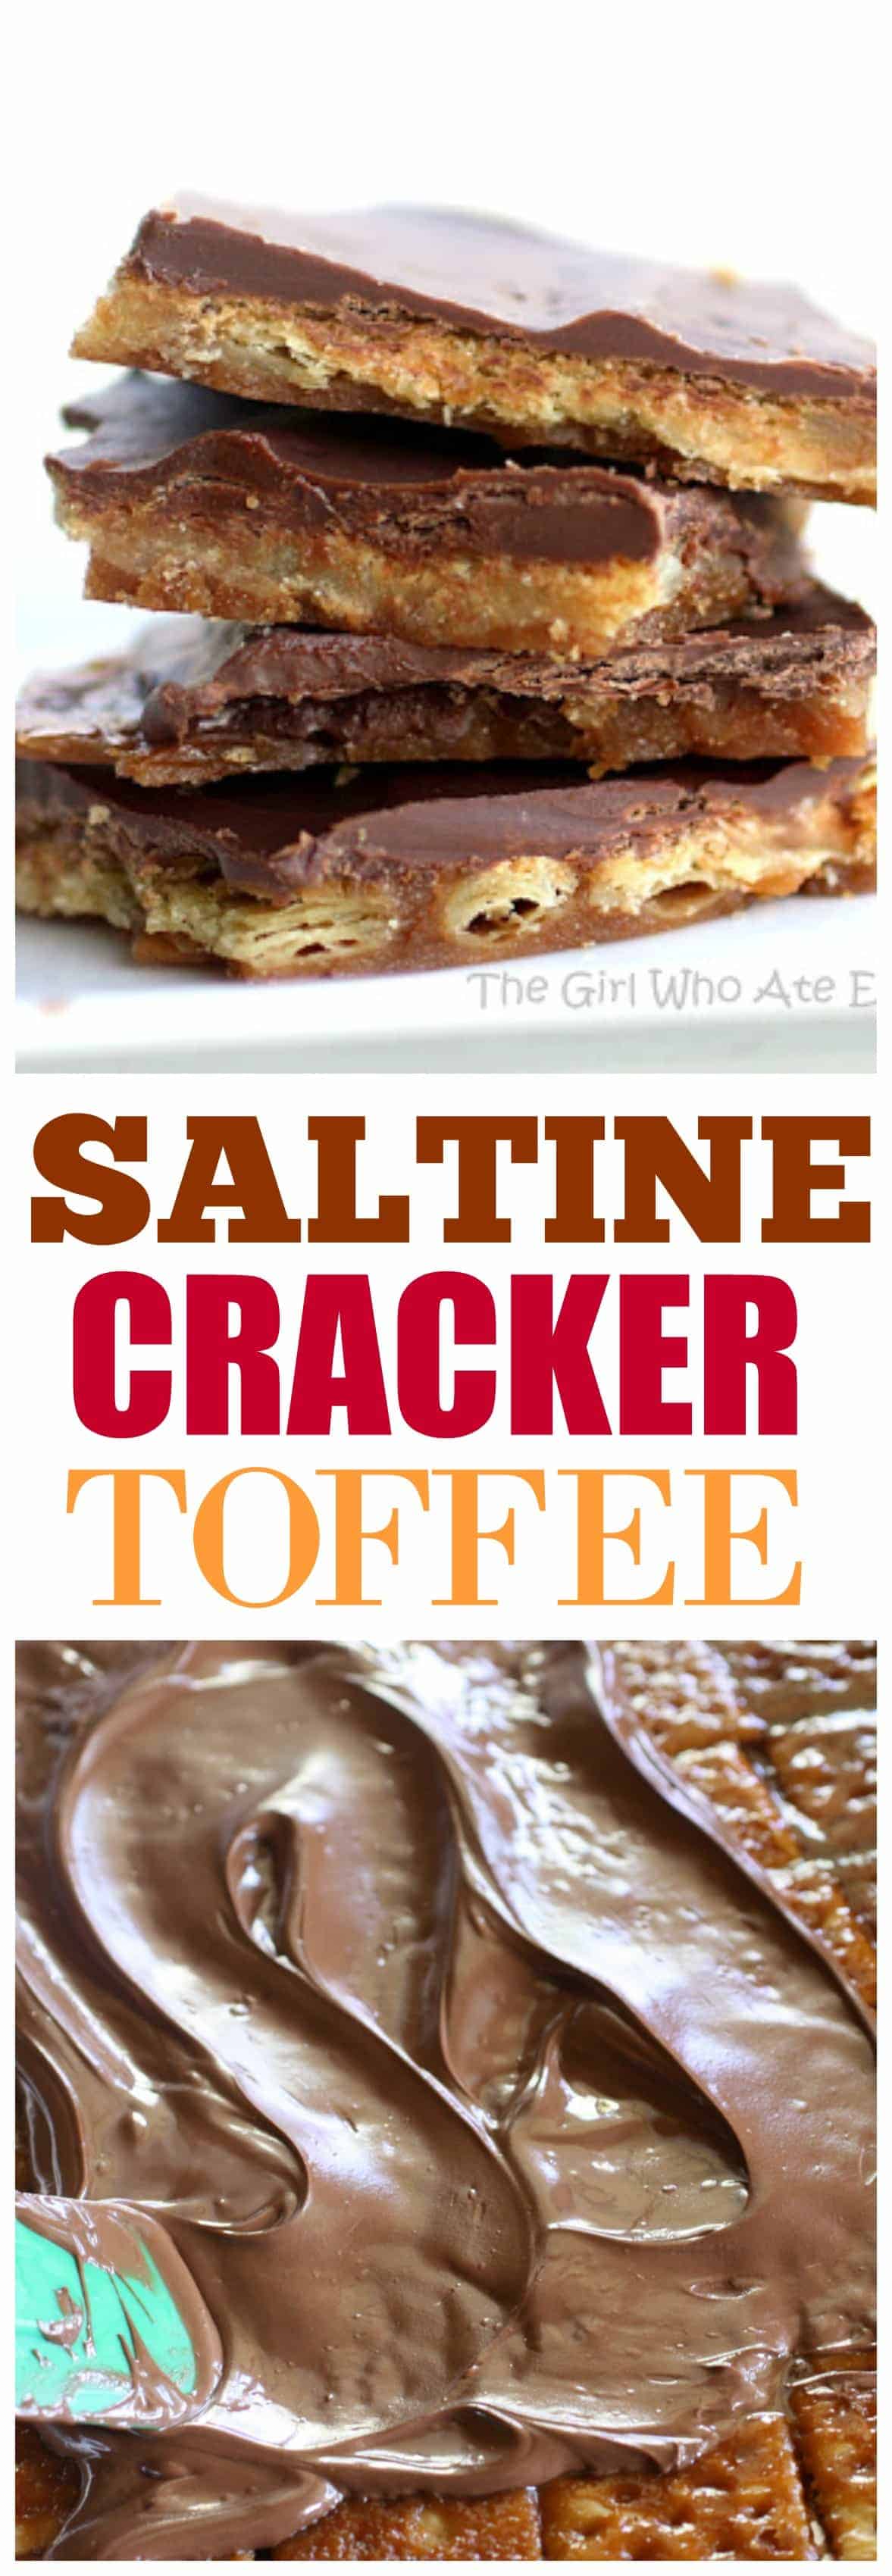 Saltine Cracker Toffee - my grandma's recipe and it's always a crowd pleaser. #chocolate #saltine #cracker #toffee #christmascrack #dessert